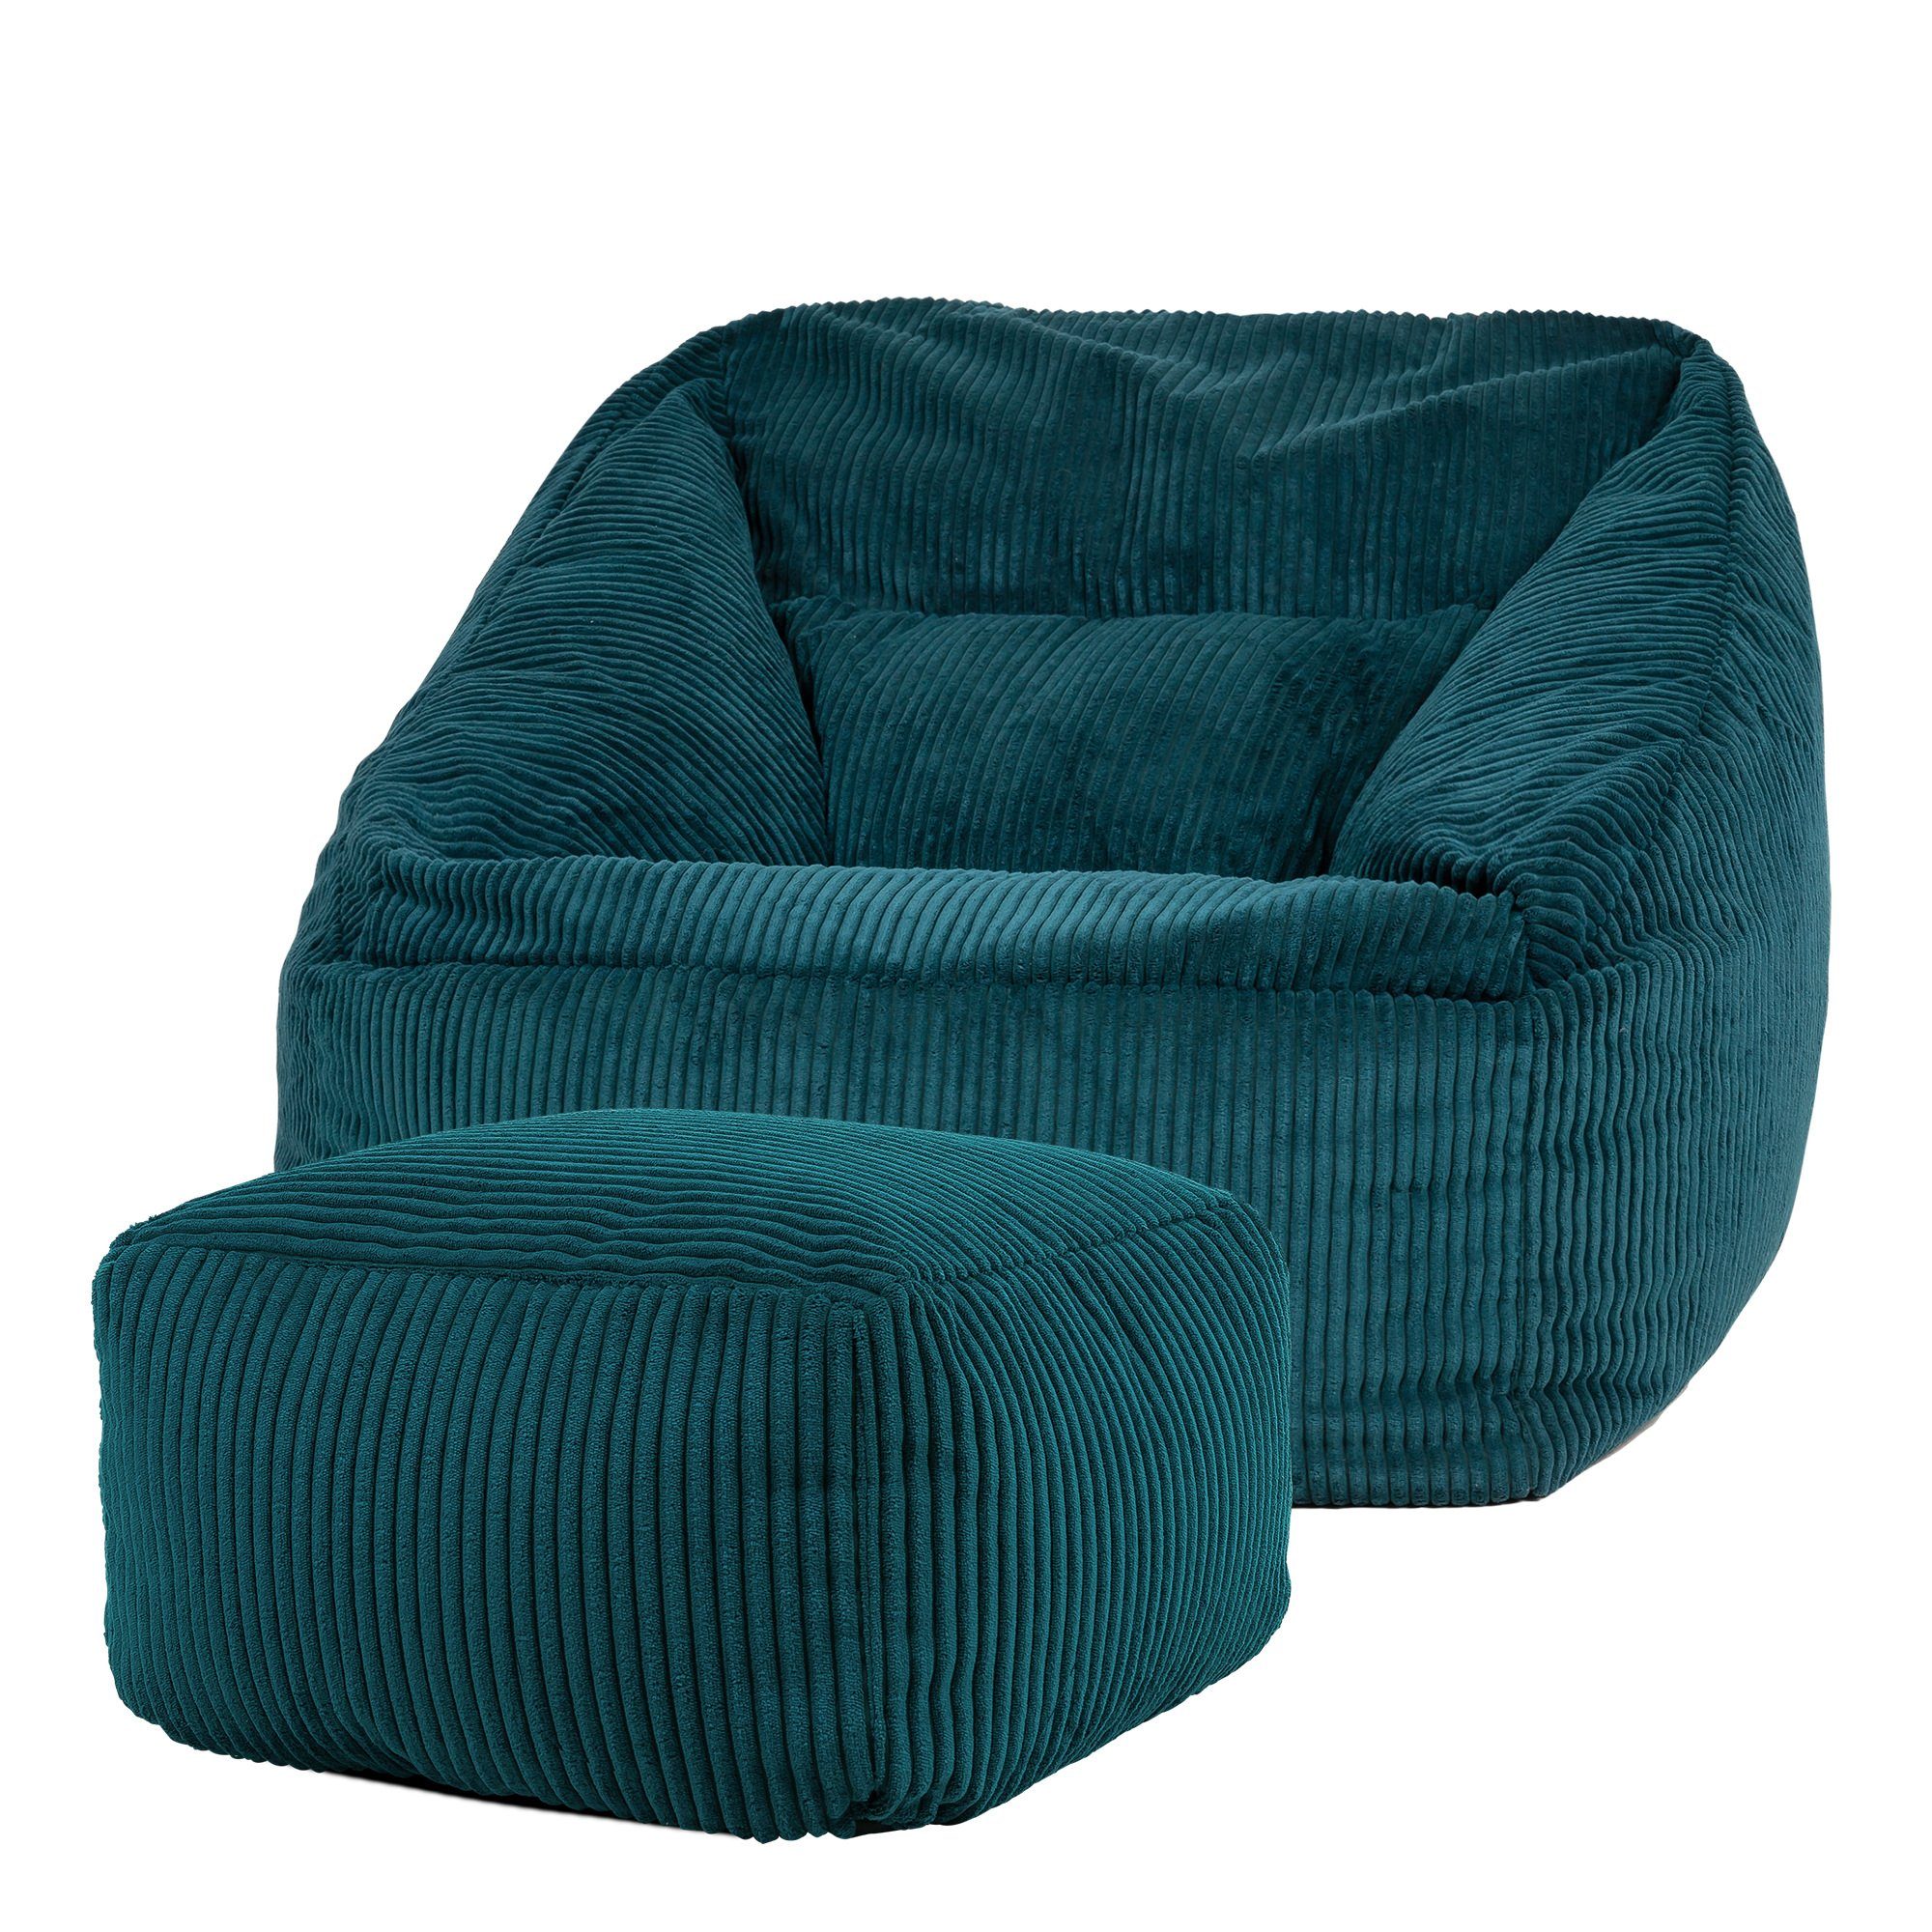 Riesen Sessel icon blaugrün Sitzpouf Cord Sitzsack Sitzsack „Morgan“ mit aus